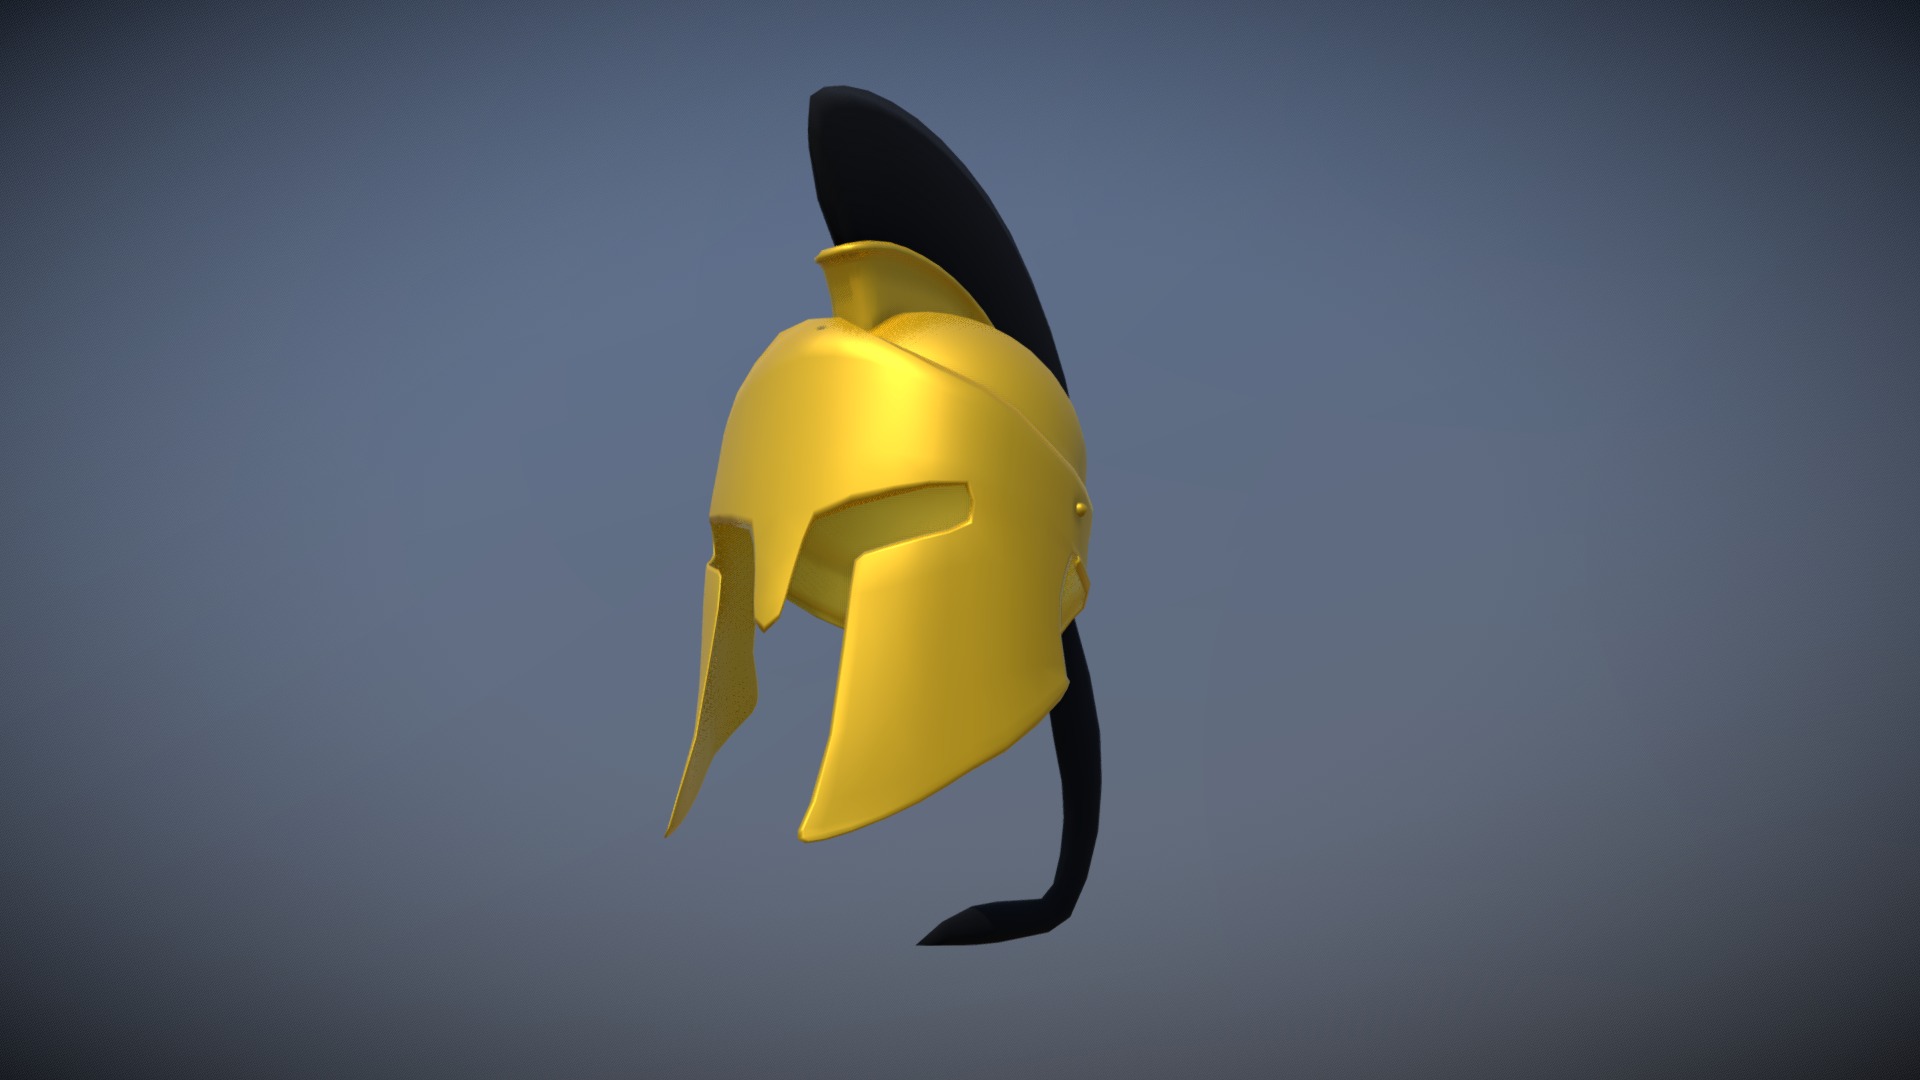 spartan-helmet-download-free-3d-model-by-yanez-designs-yanez-designs-07ab6bc-sketchfab